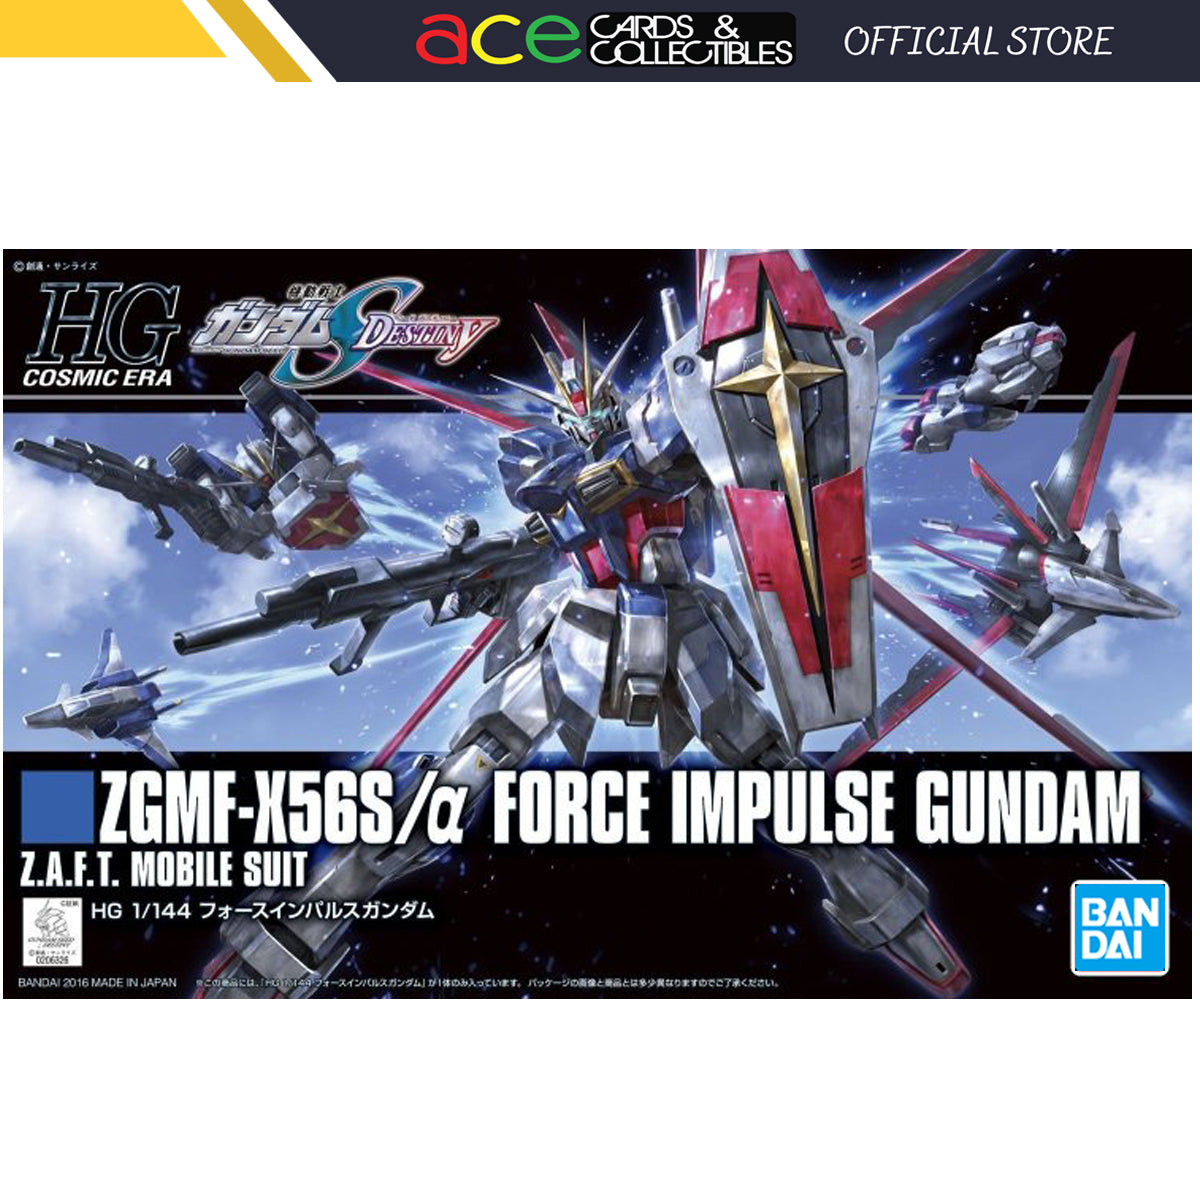 Gunpla HGCE 1/144 ZGMF-X56S/a Force Impulse Seed Gundam-Bandai-Ace Cards &amp; Collectibles